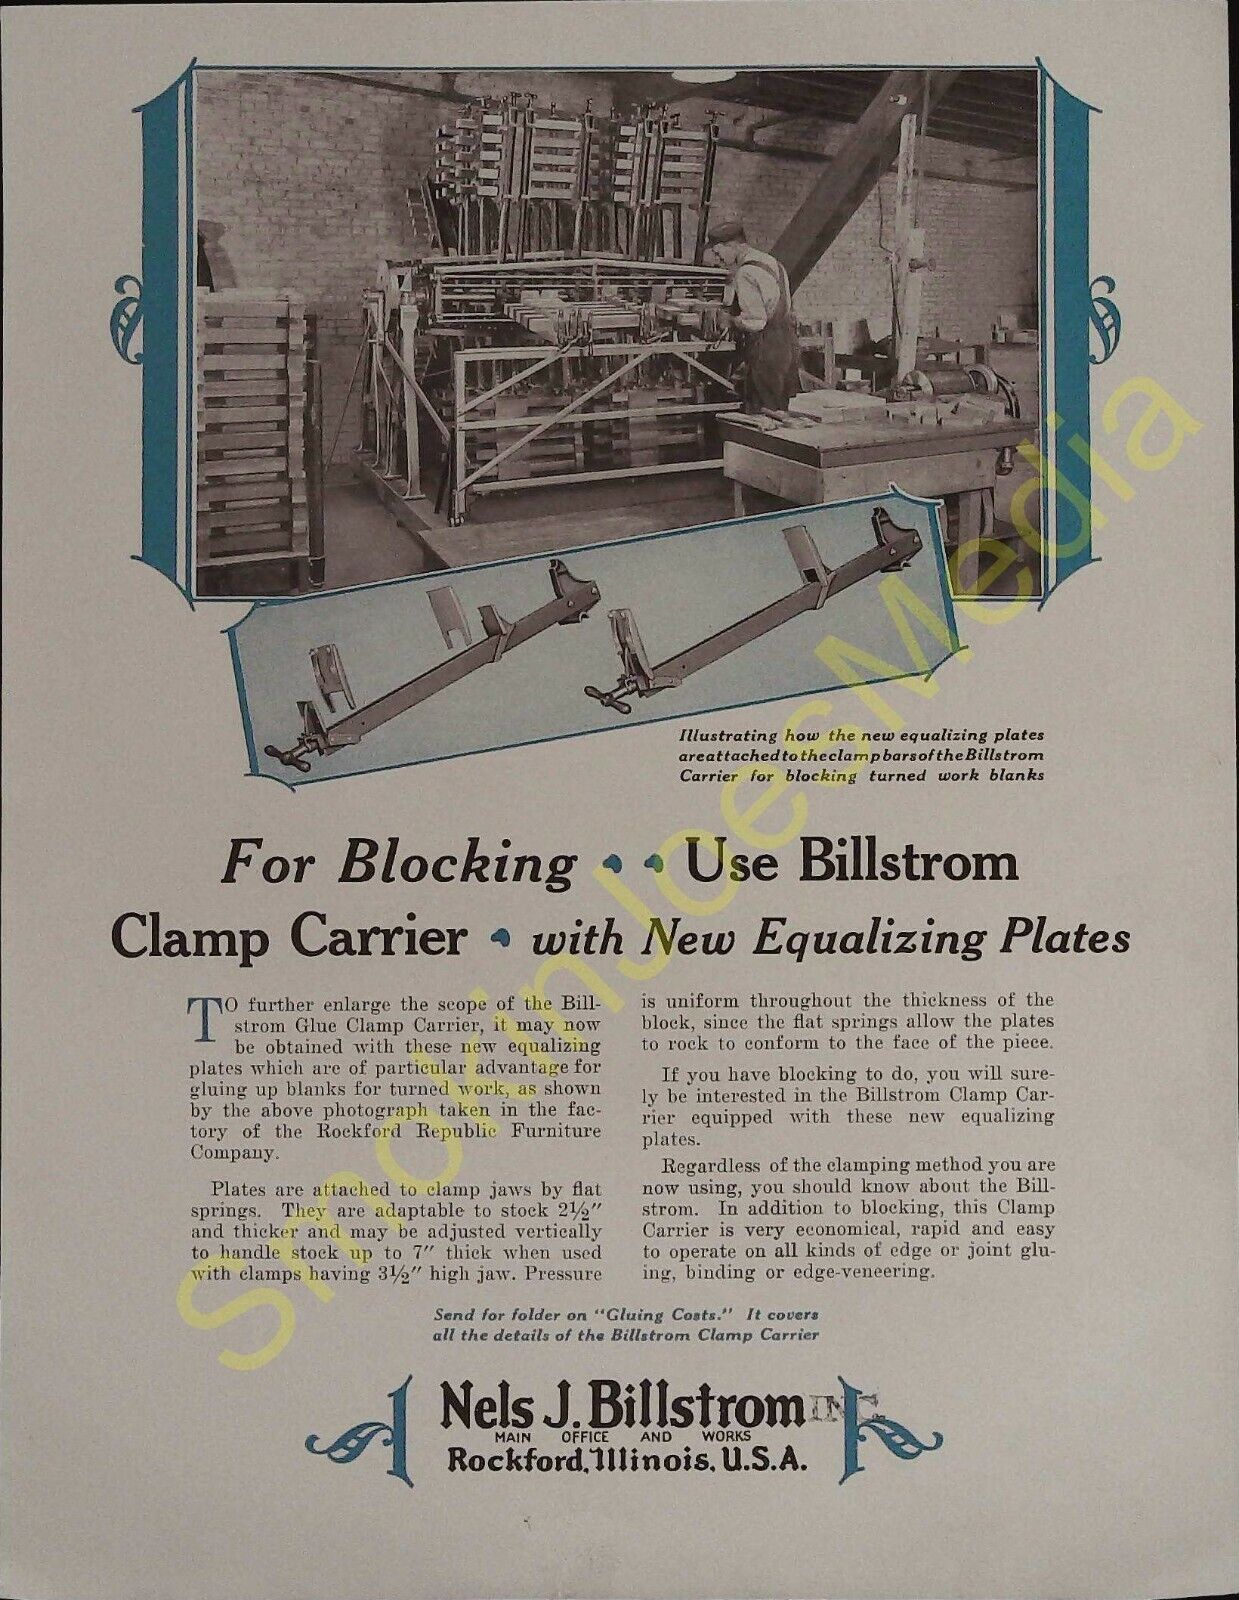 Vintage Nels J. Billstrom Rockford Illinois USA Use Billstrom Clamp Carrier 